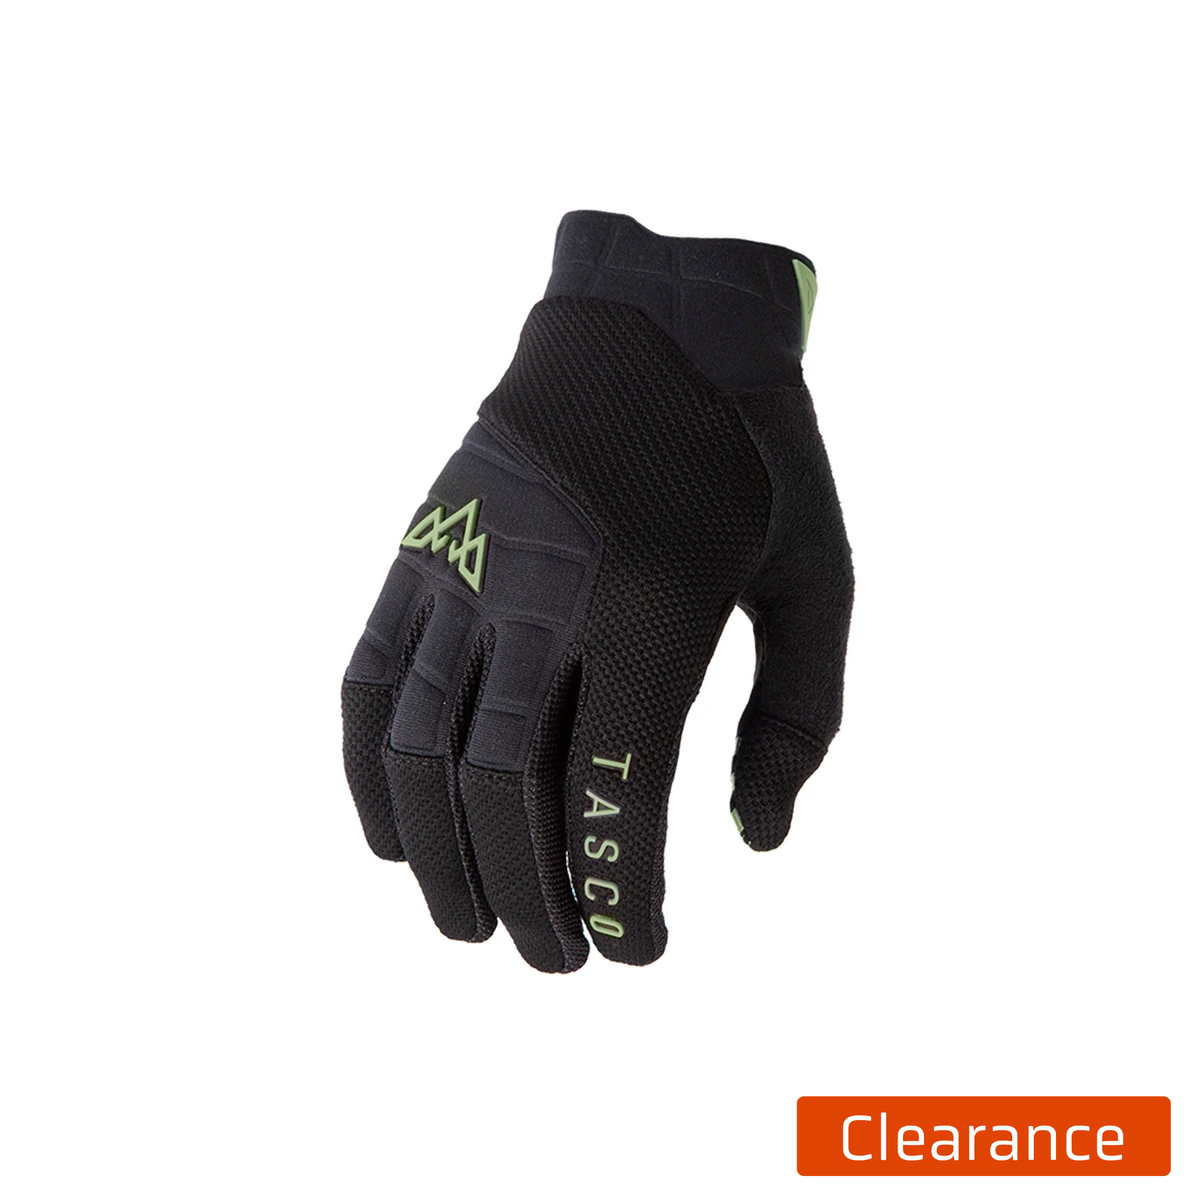 Pathfinder MTB Gloves - Sage (Size XS Only)